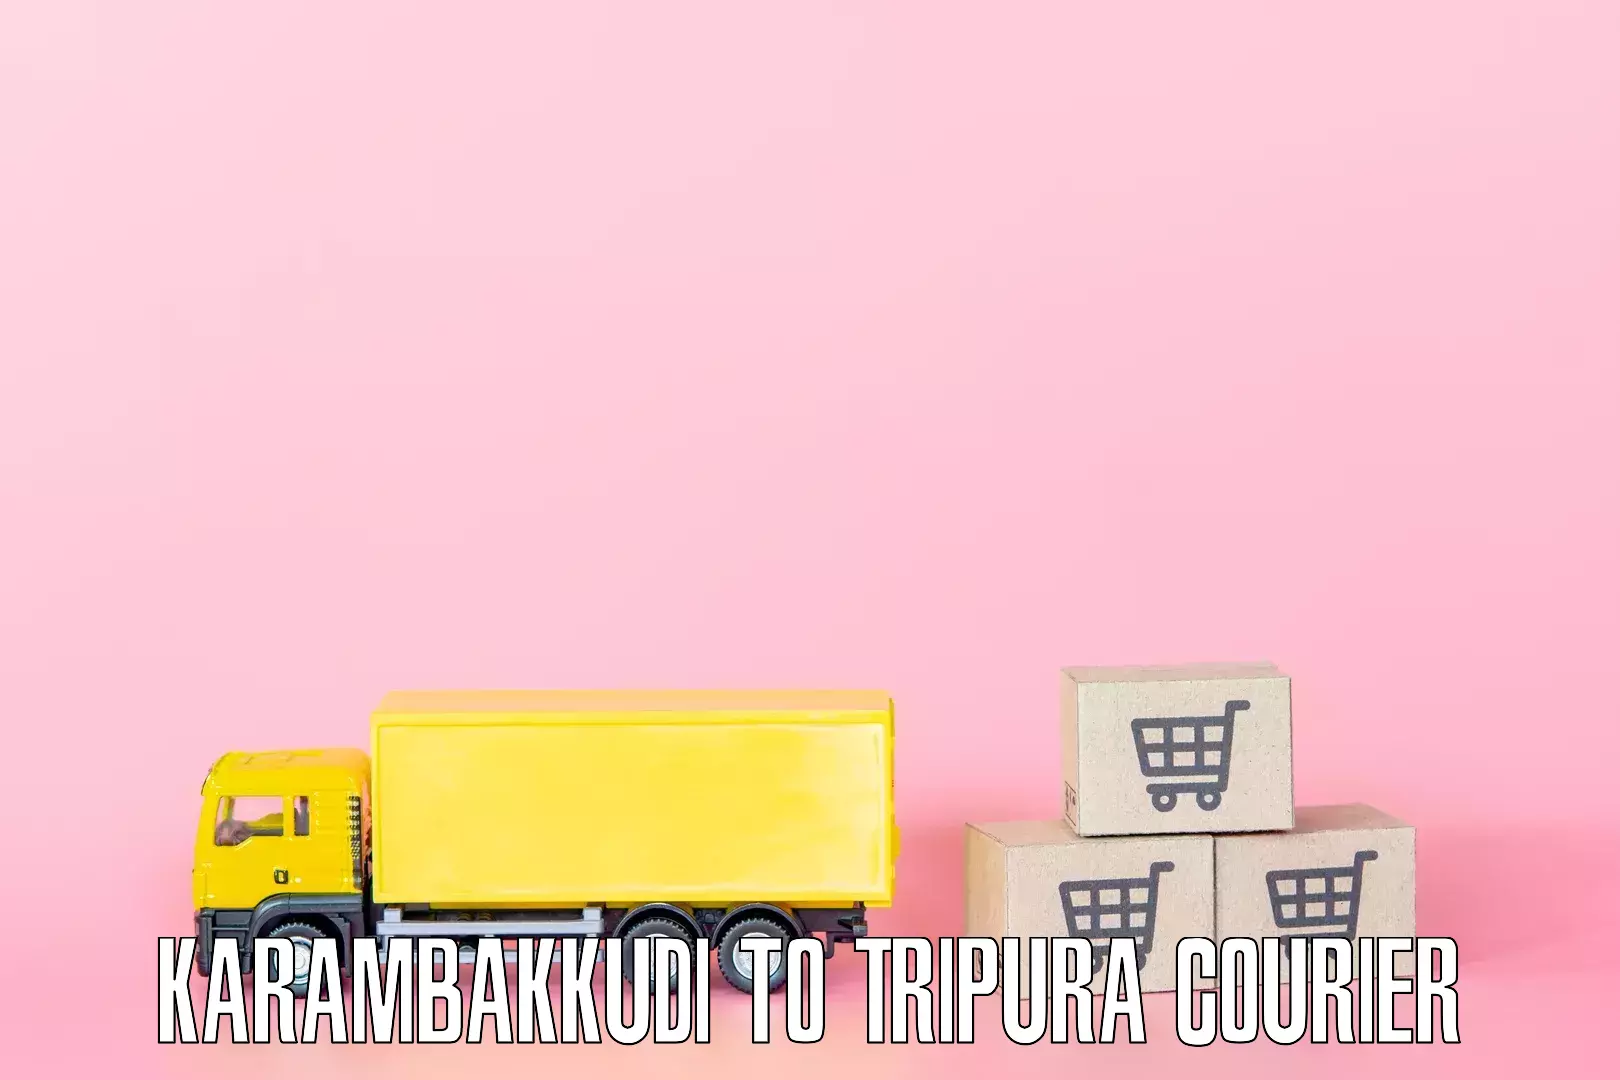 Moving and packing experts Karambakkudi to Tripura